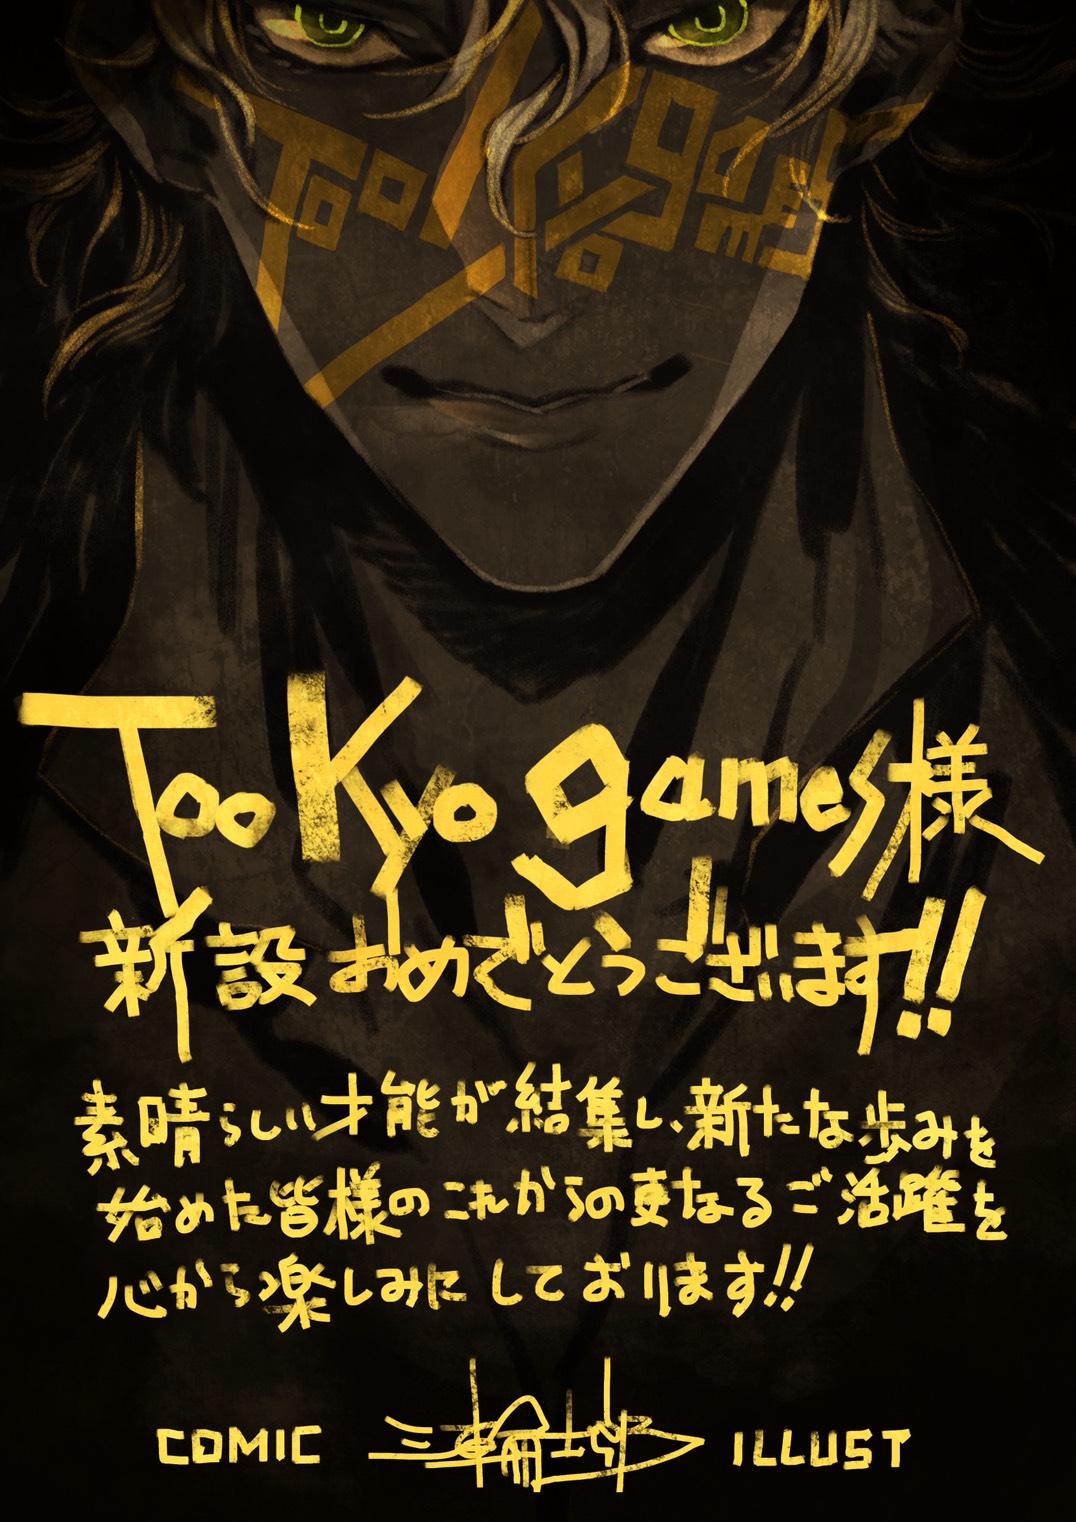 Tomodachi Game - Related Comics, Information, Comments - BILIBILI COMICS